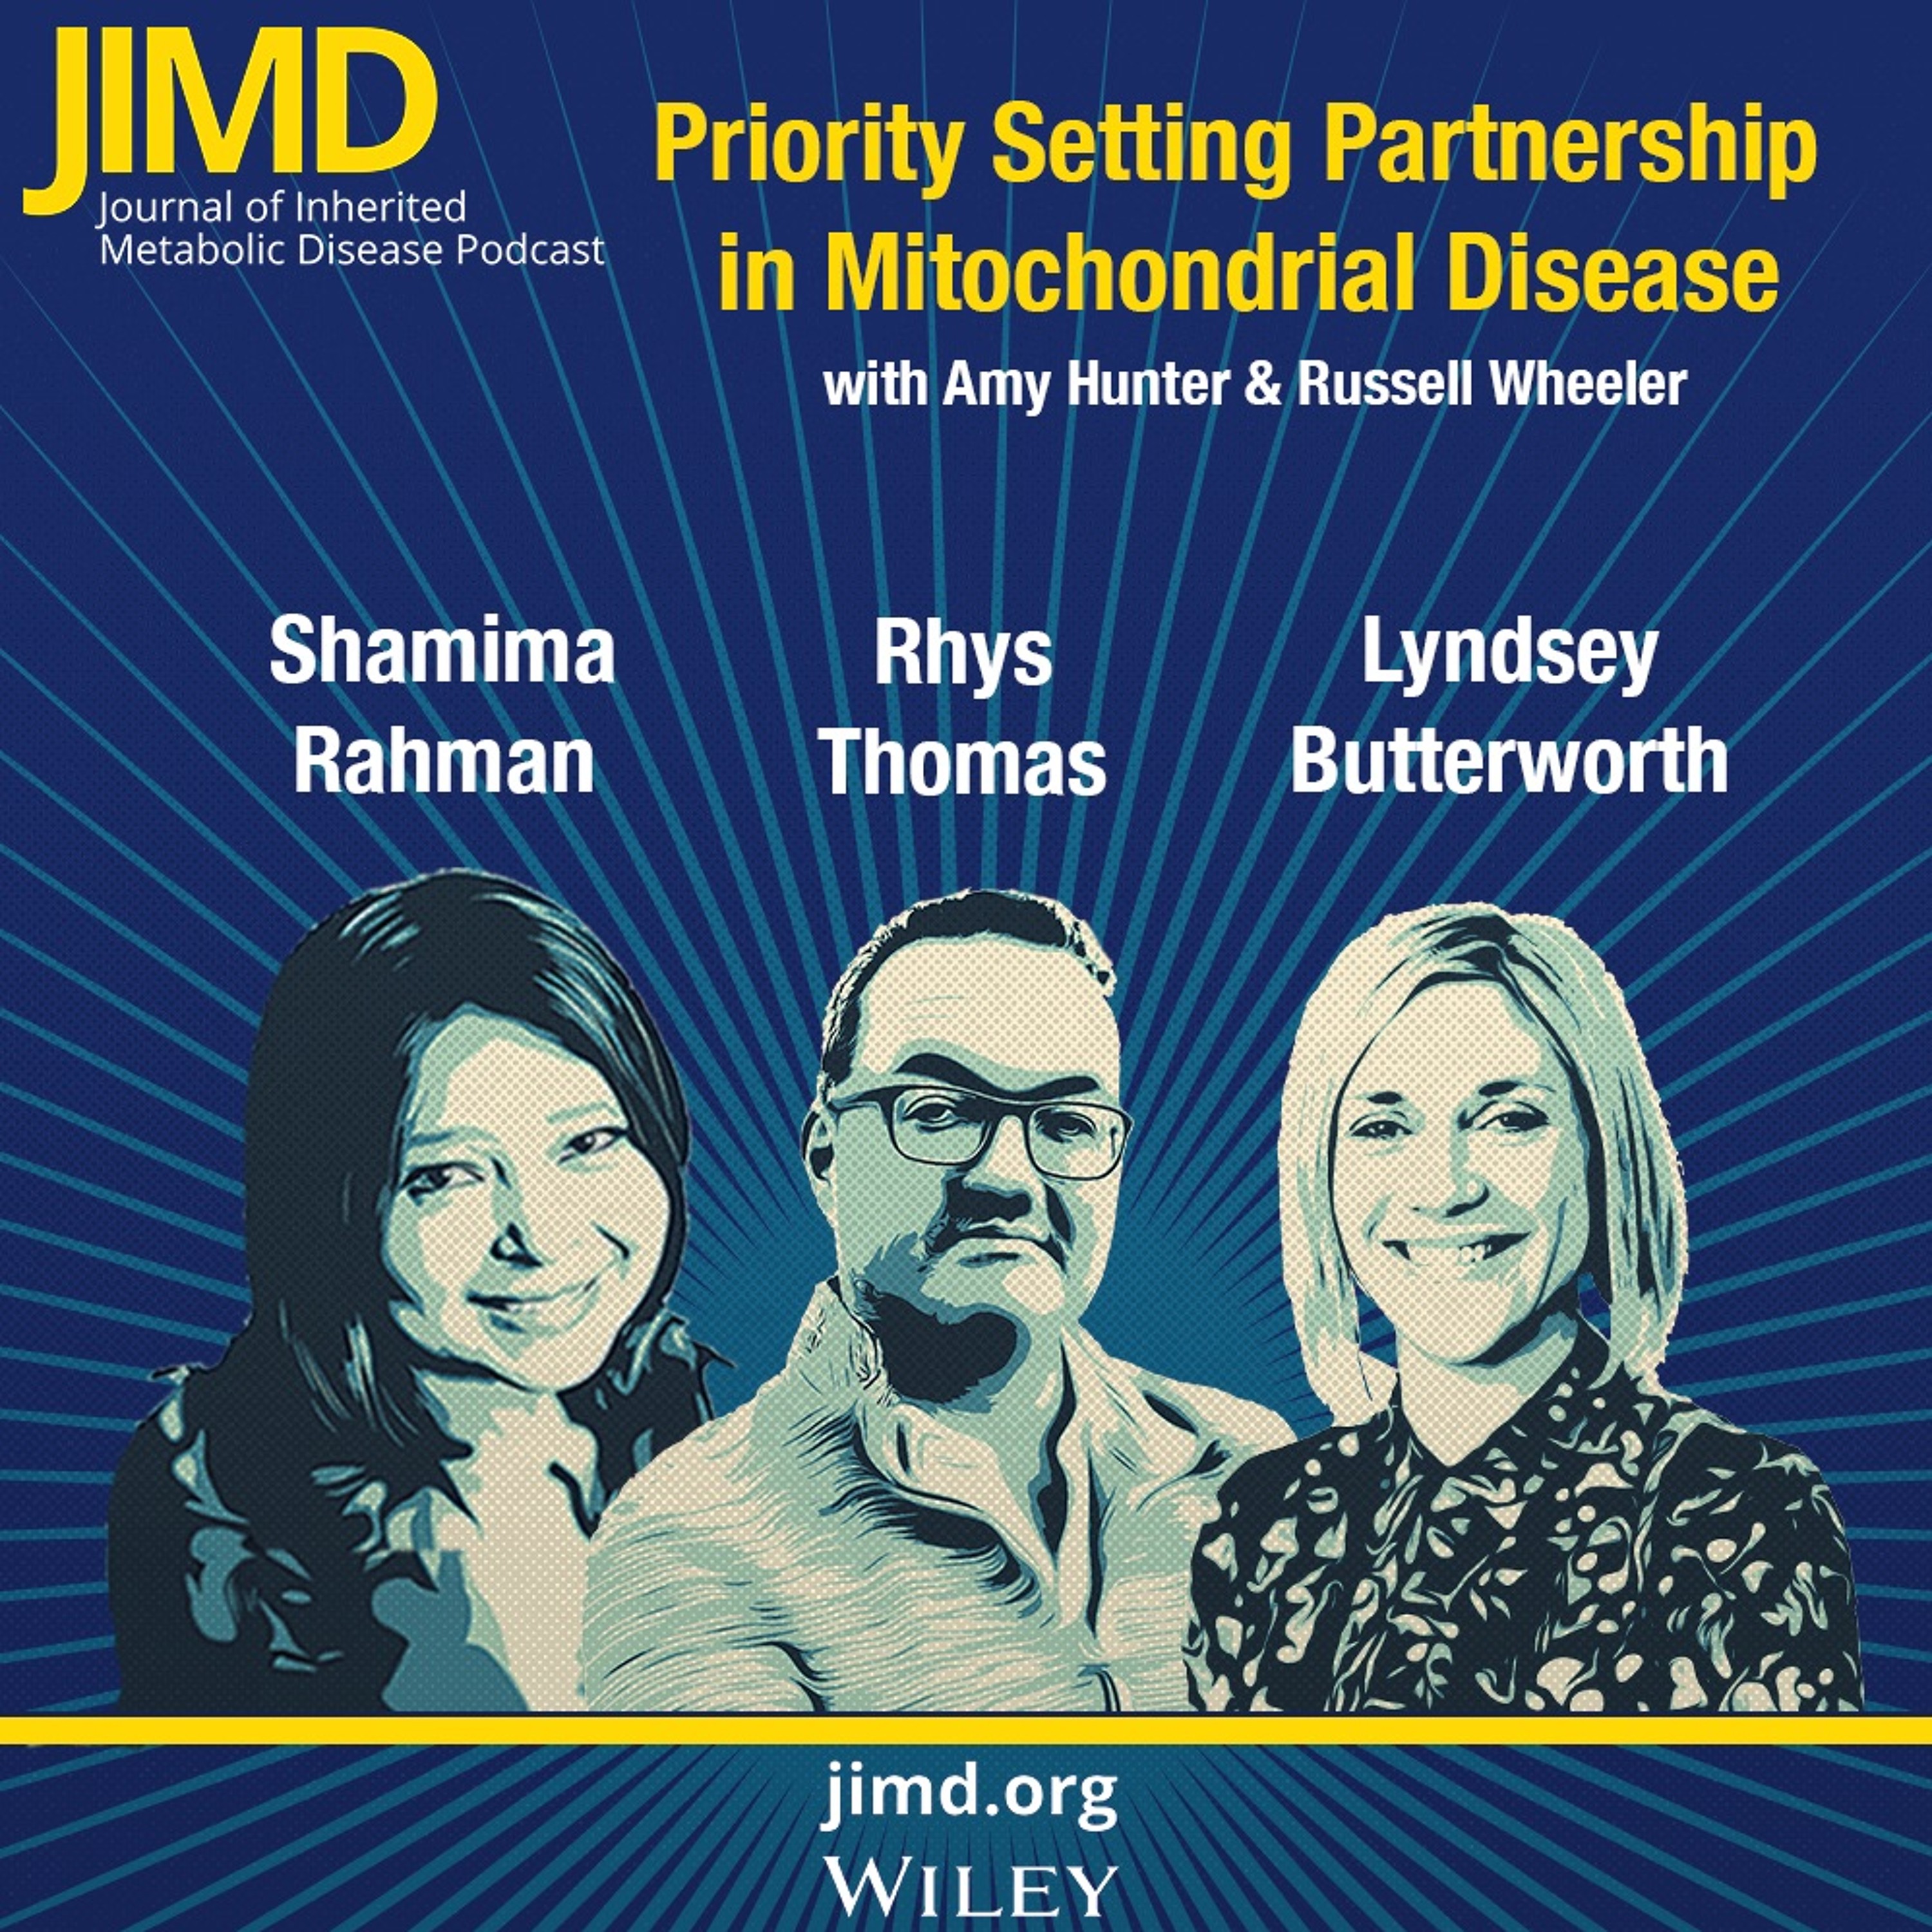 Priority Setting Partnership in Mitochondrial Disease